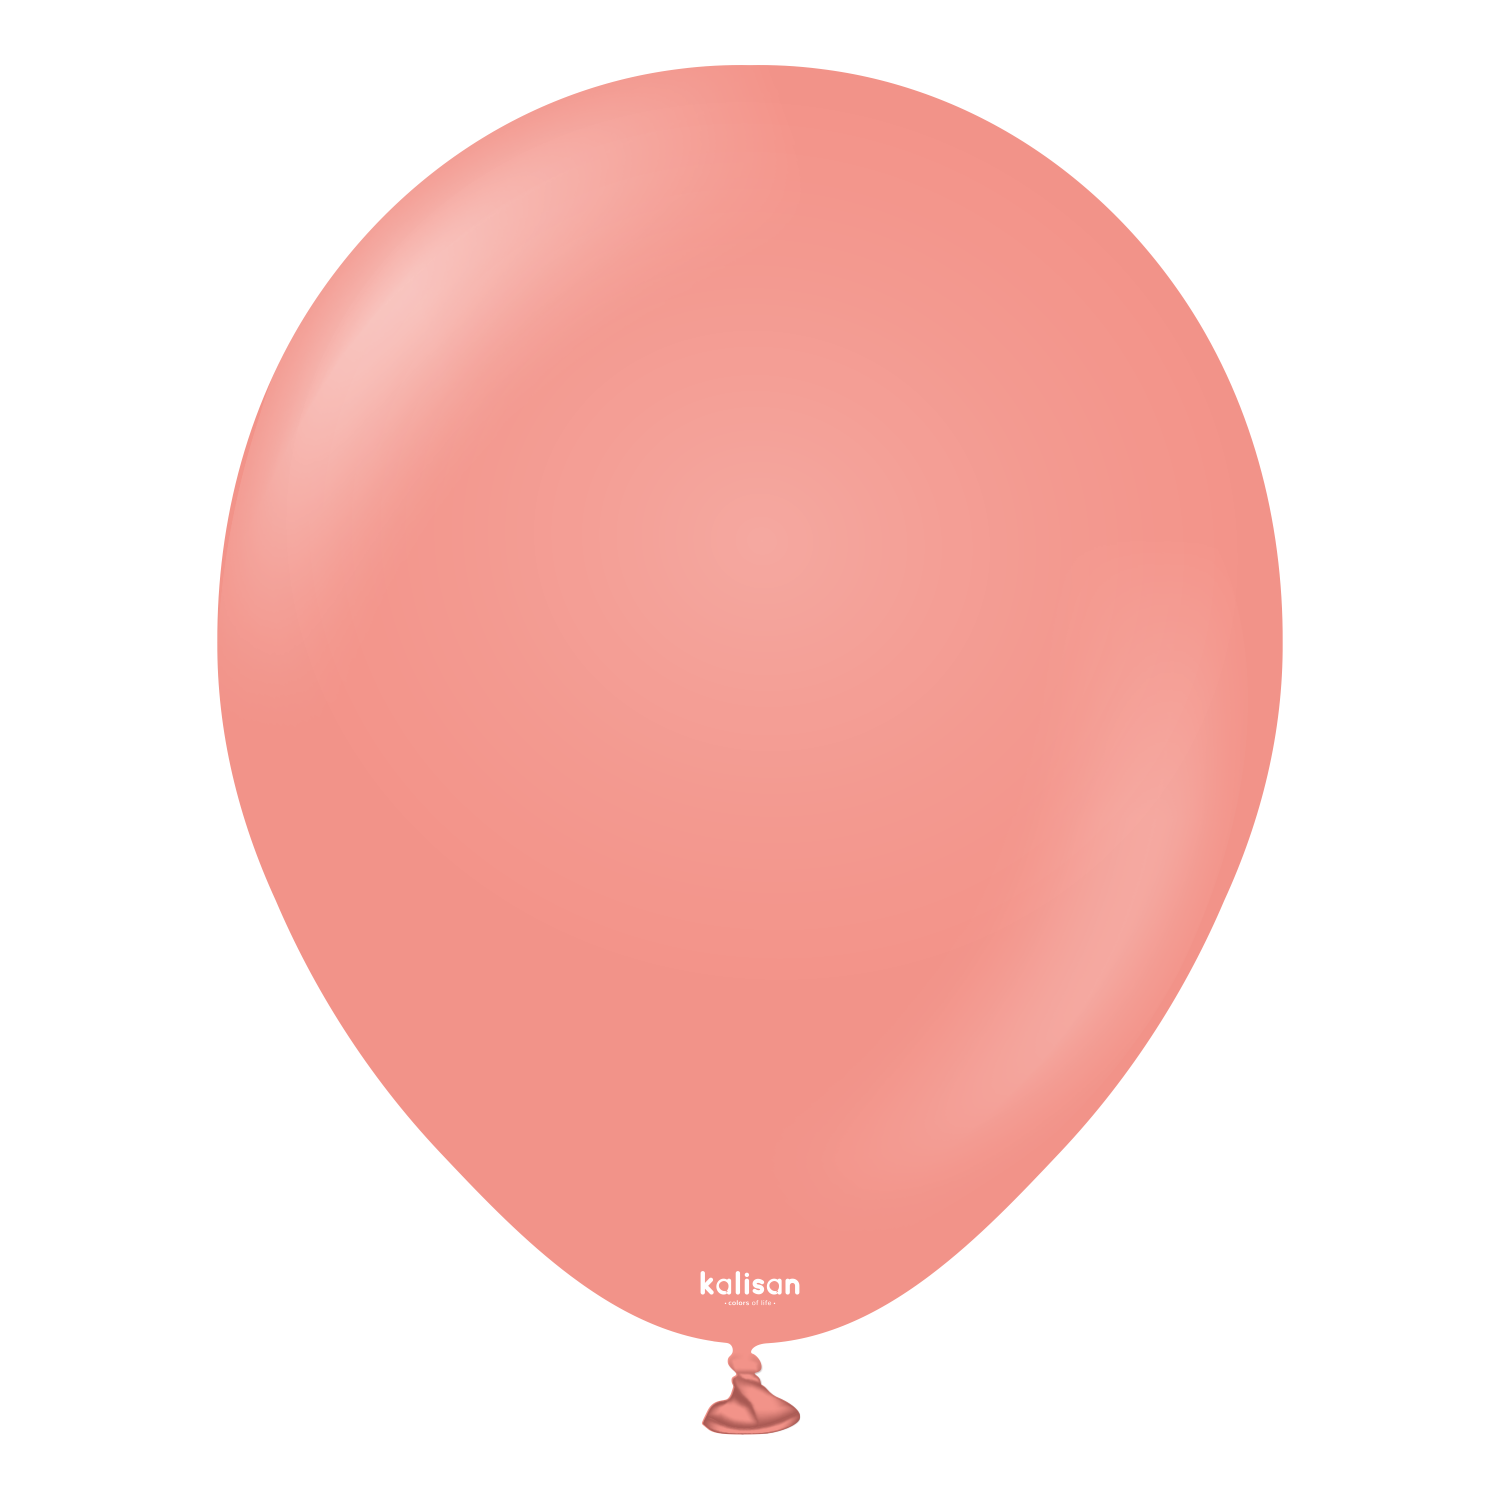 Premium lateksballong Kalisan i korall farge 